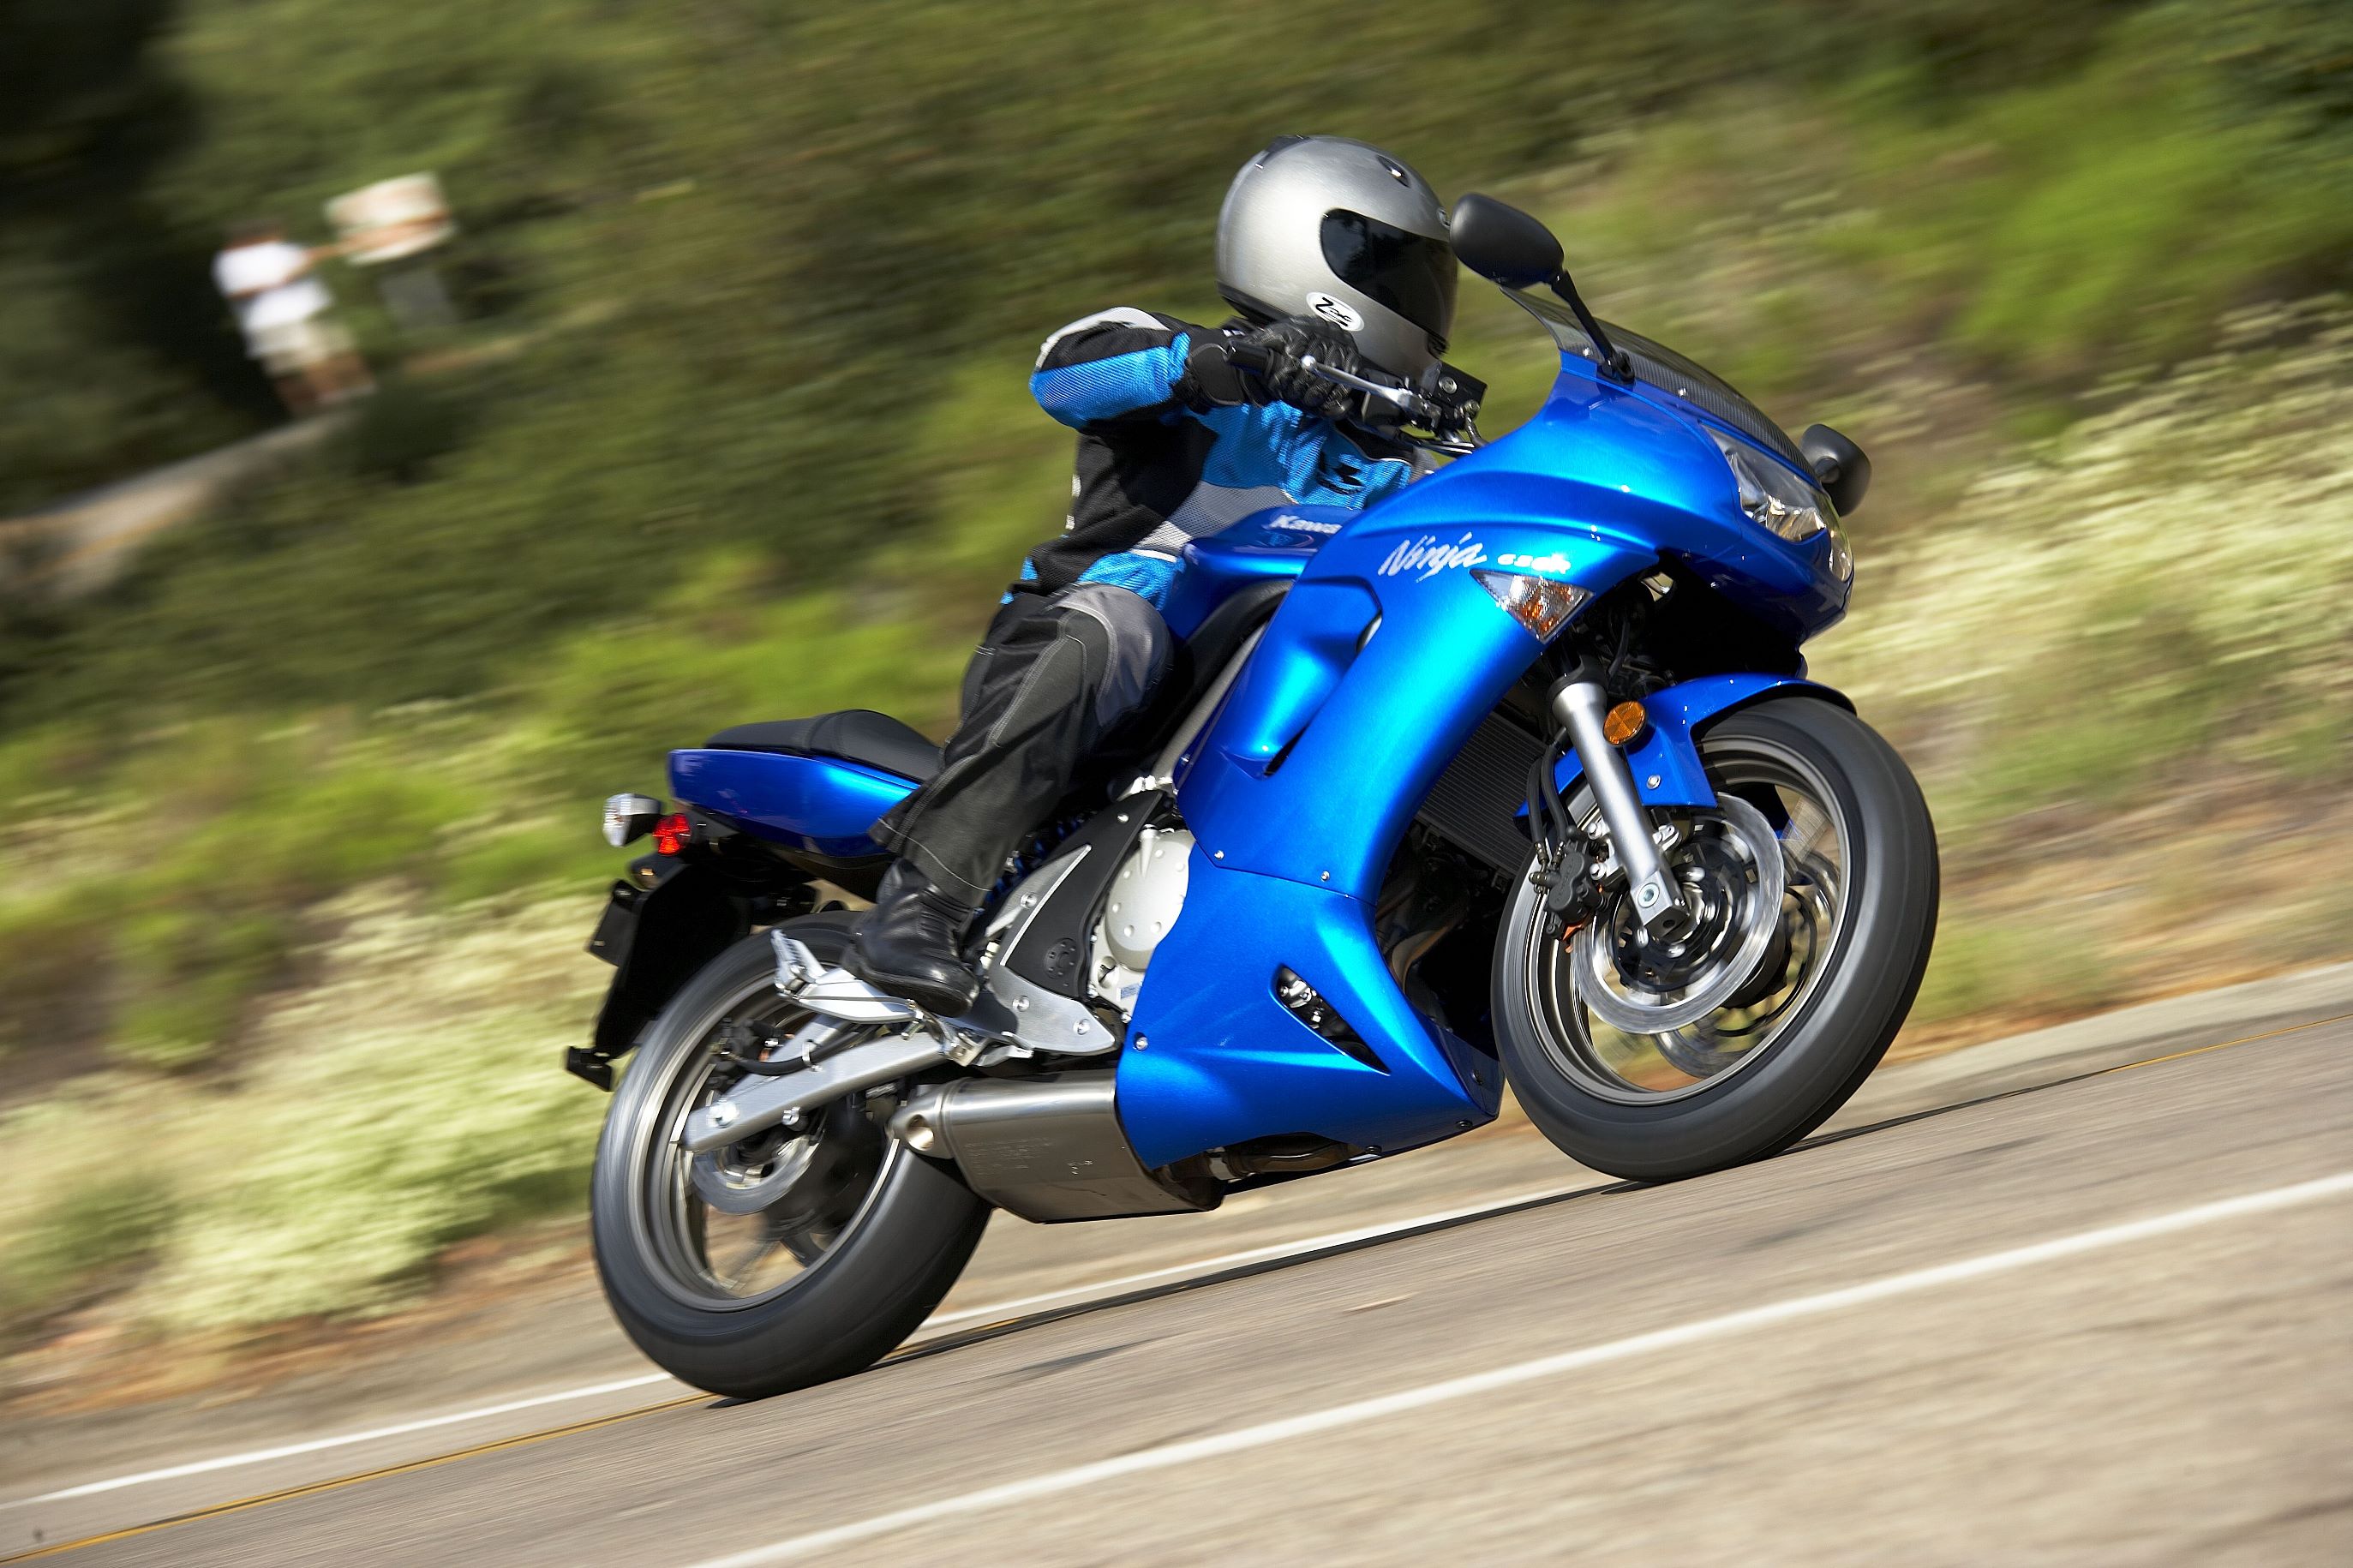 desktop Images vehicles, motorcycle, motorcycles